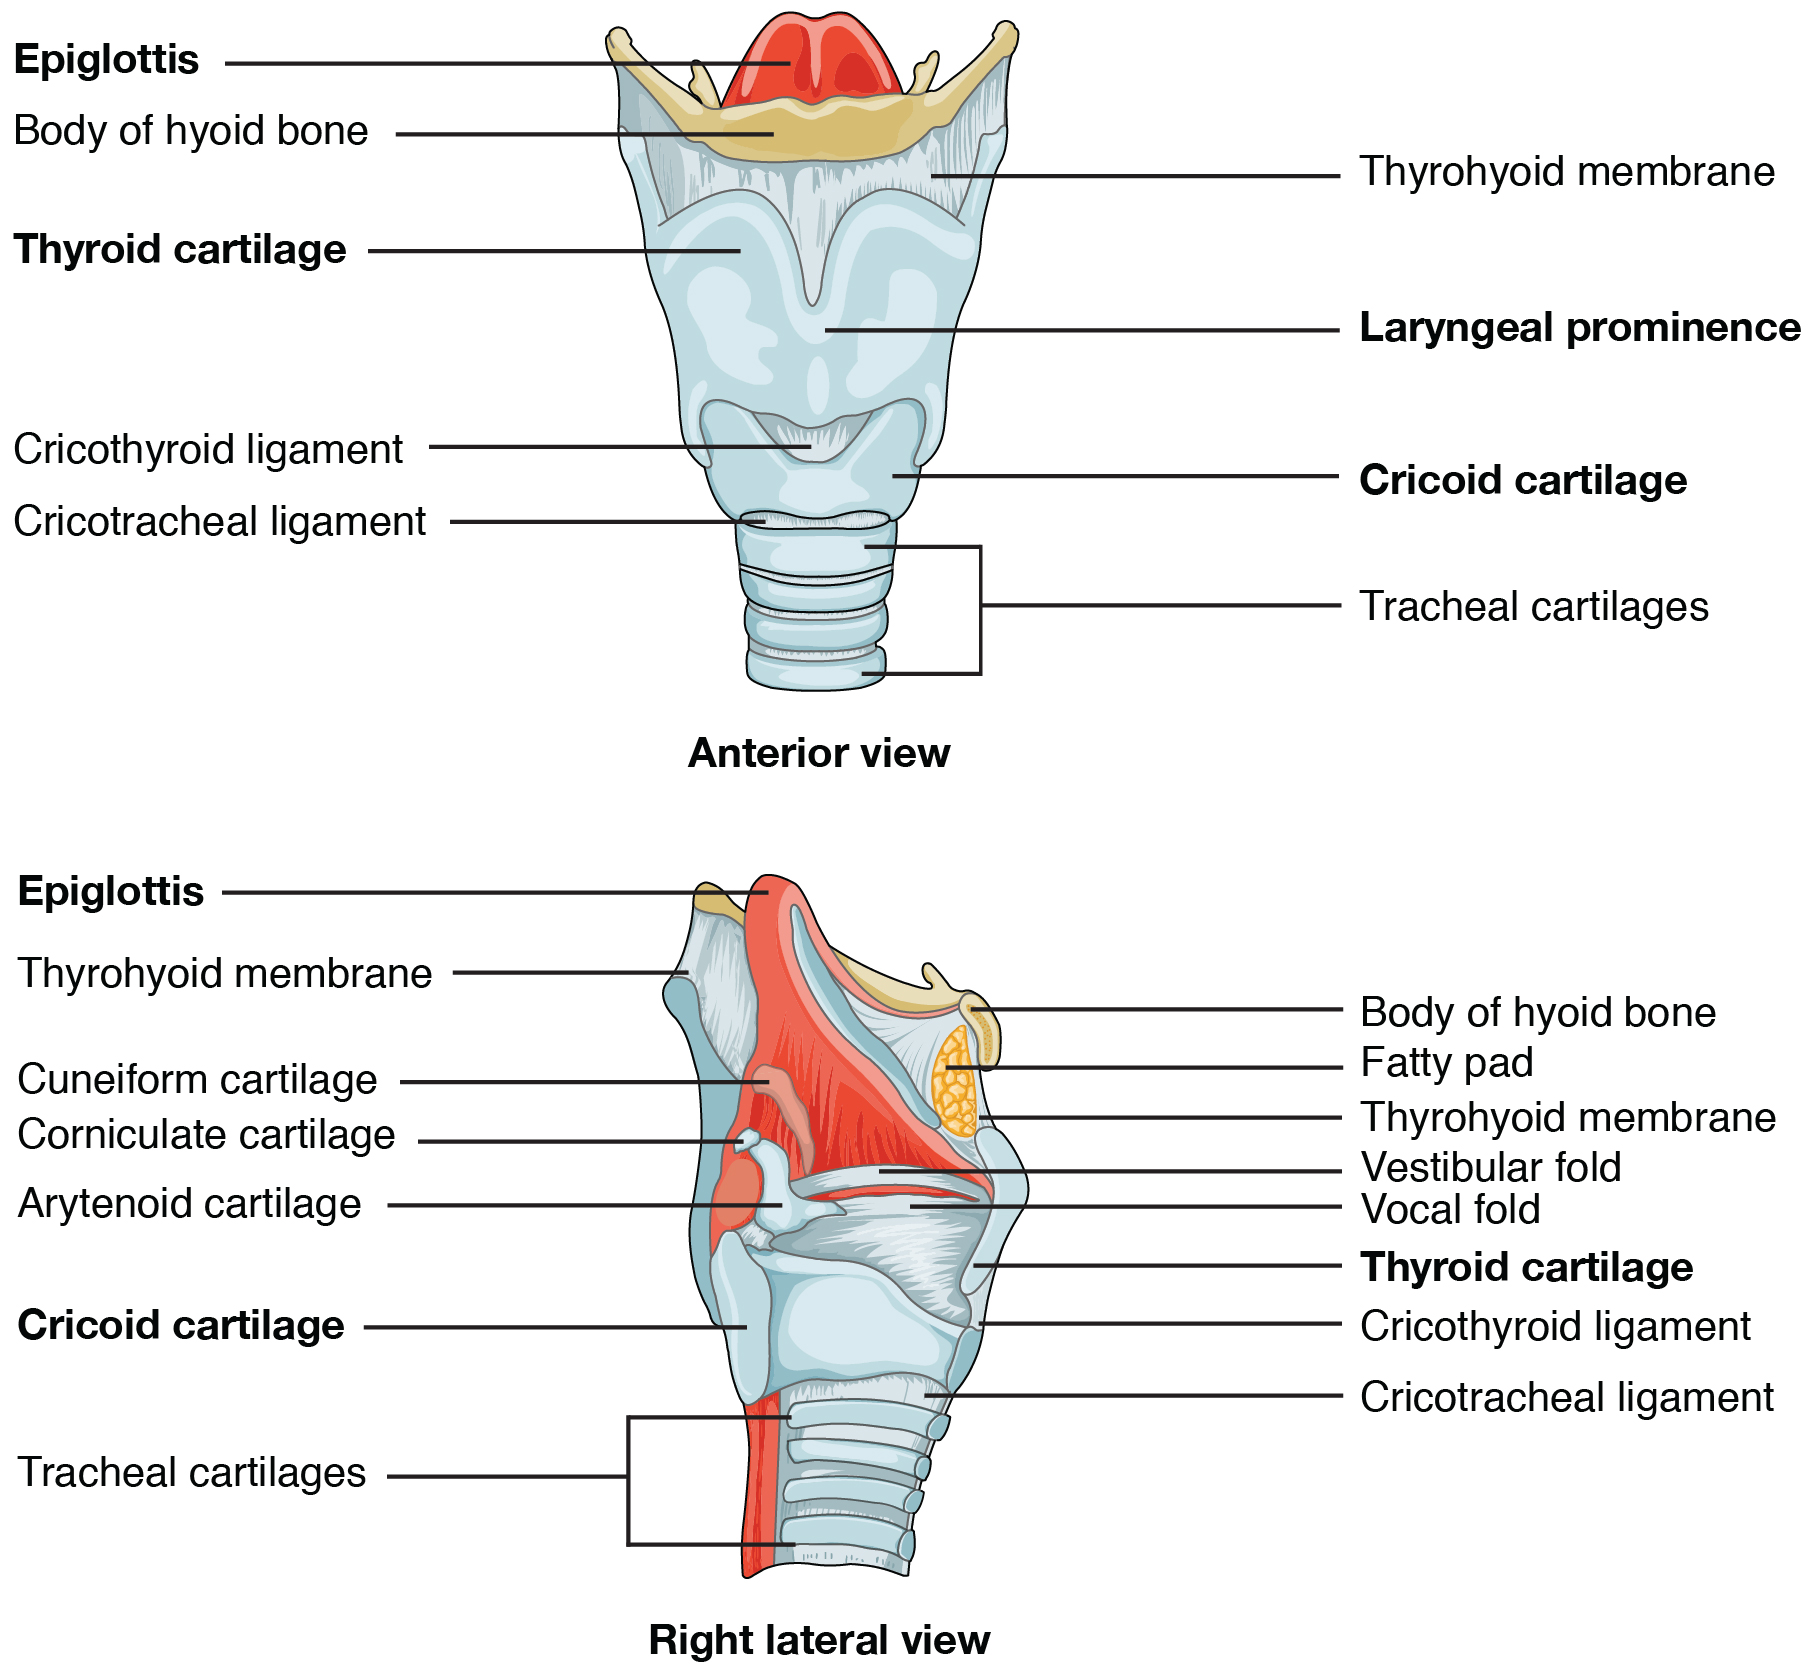 Epiglottis Model Labeled